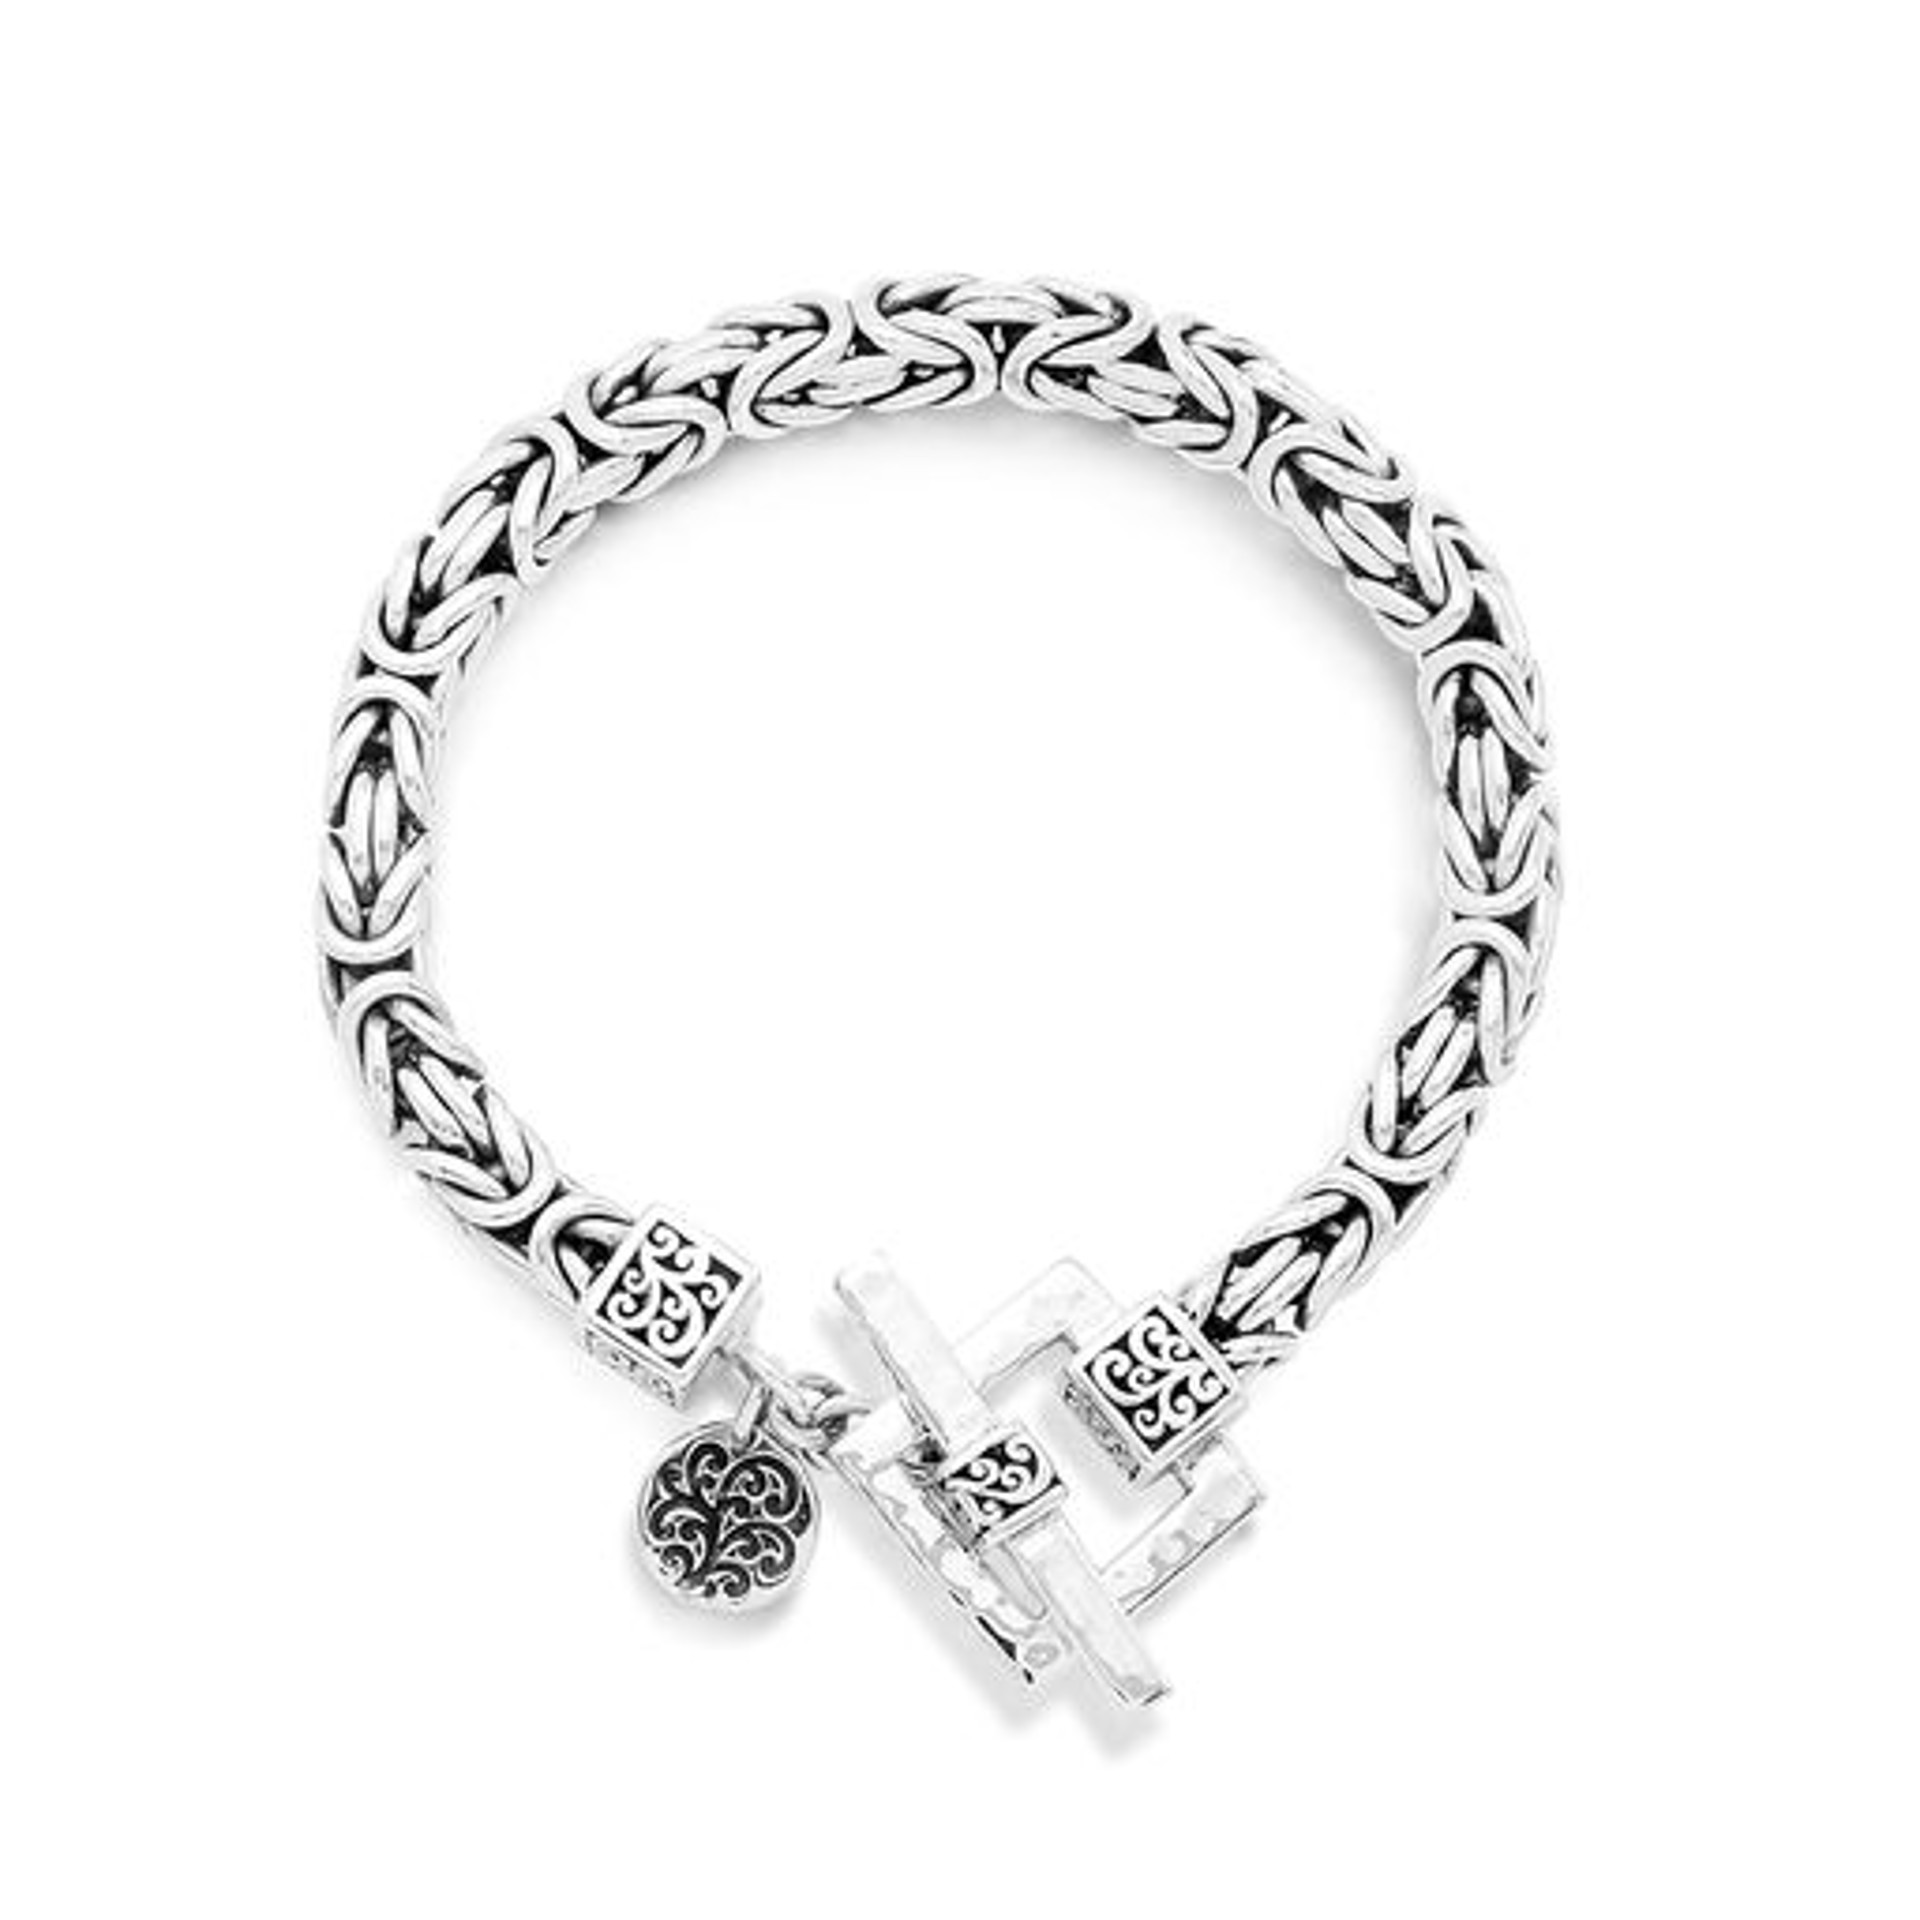 6910 Sterling Silver Woven Bracelet by Lois Hill